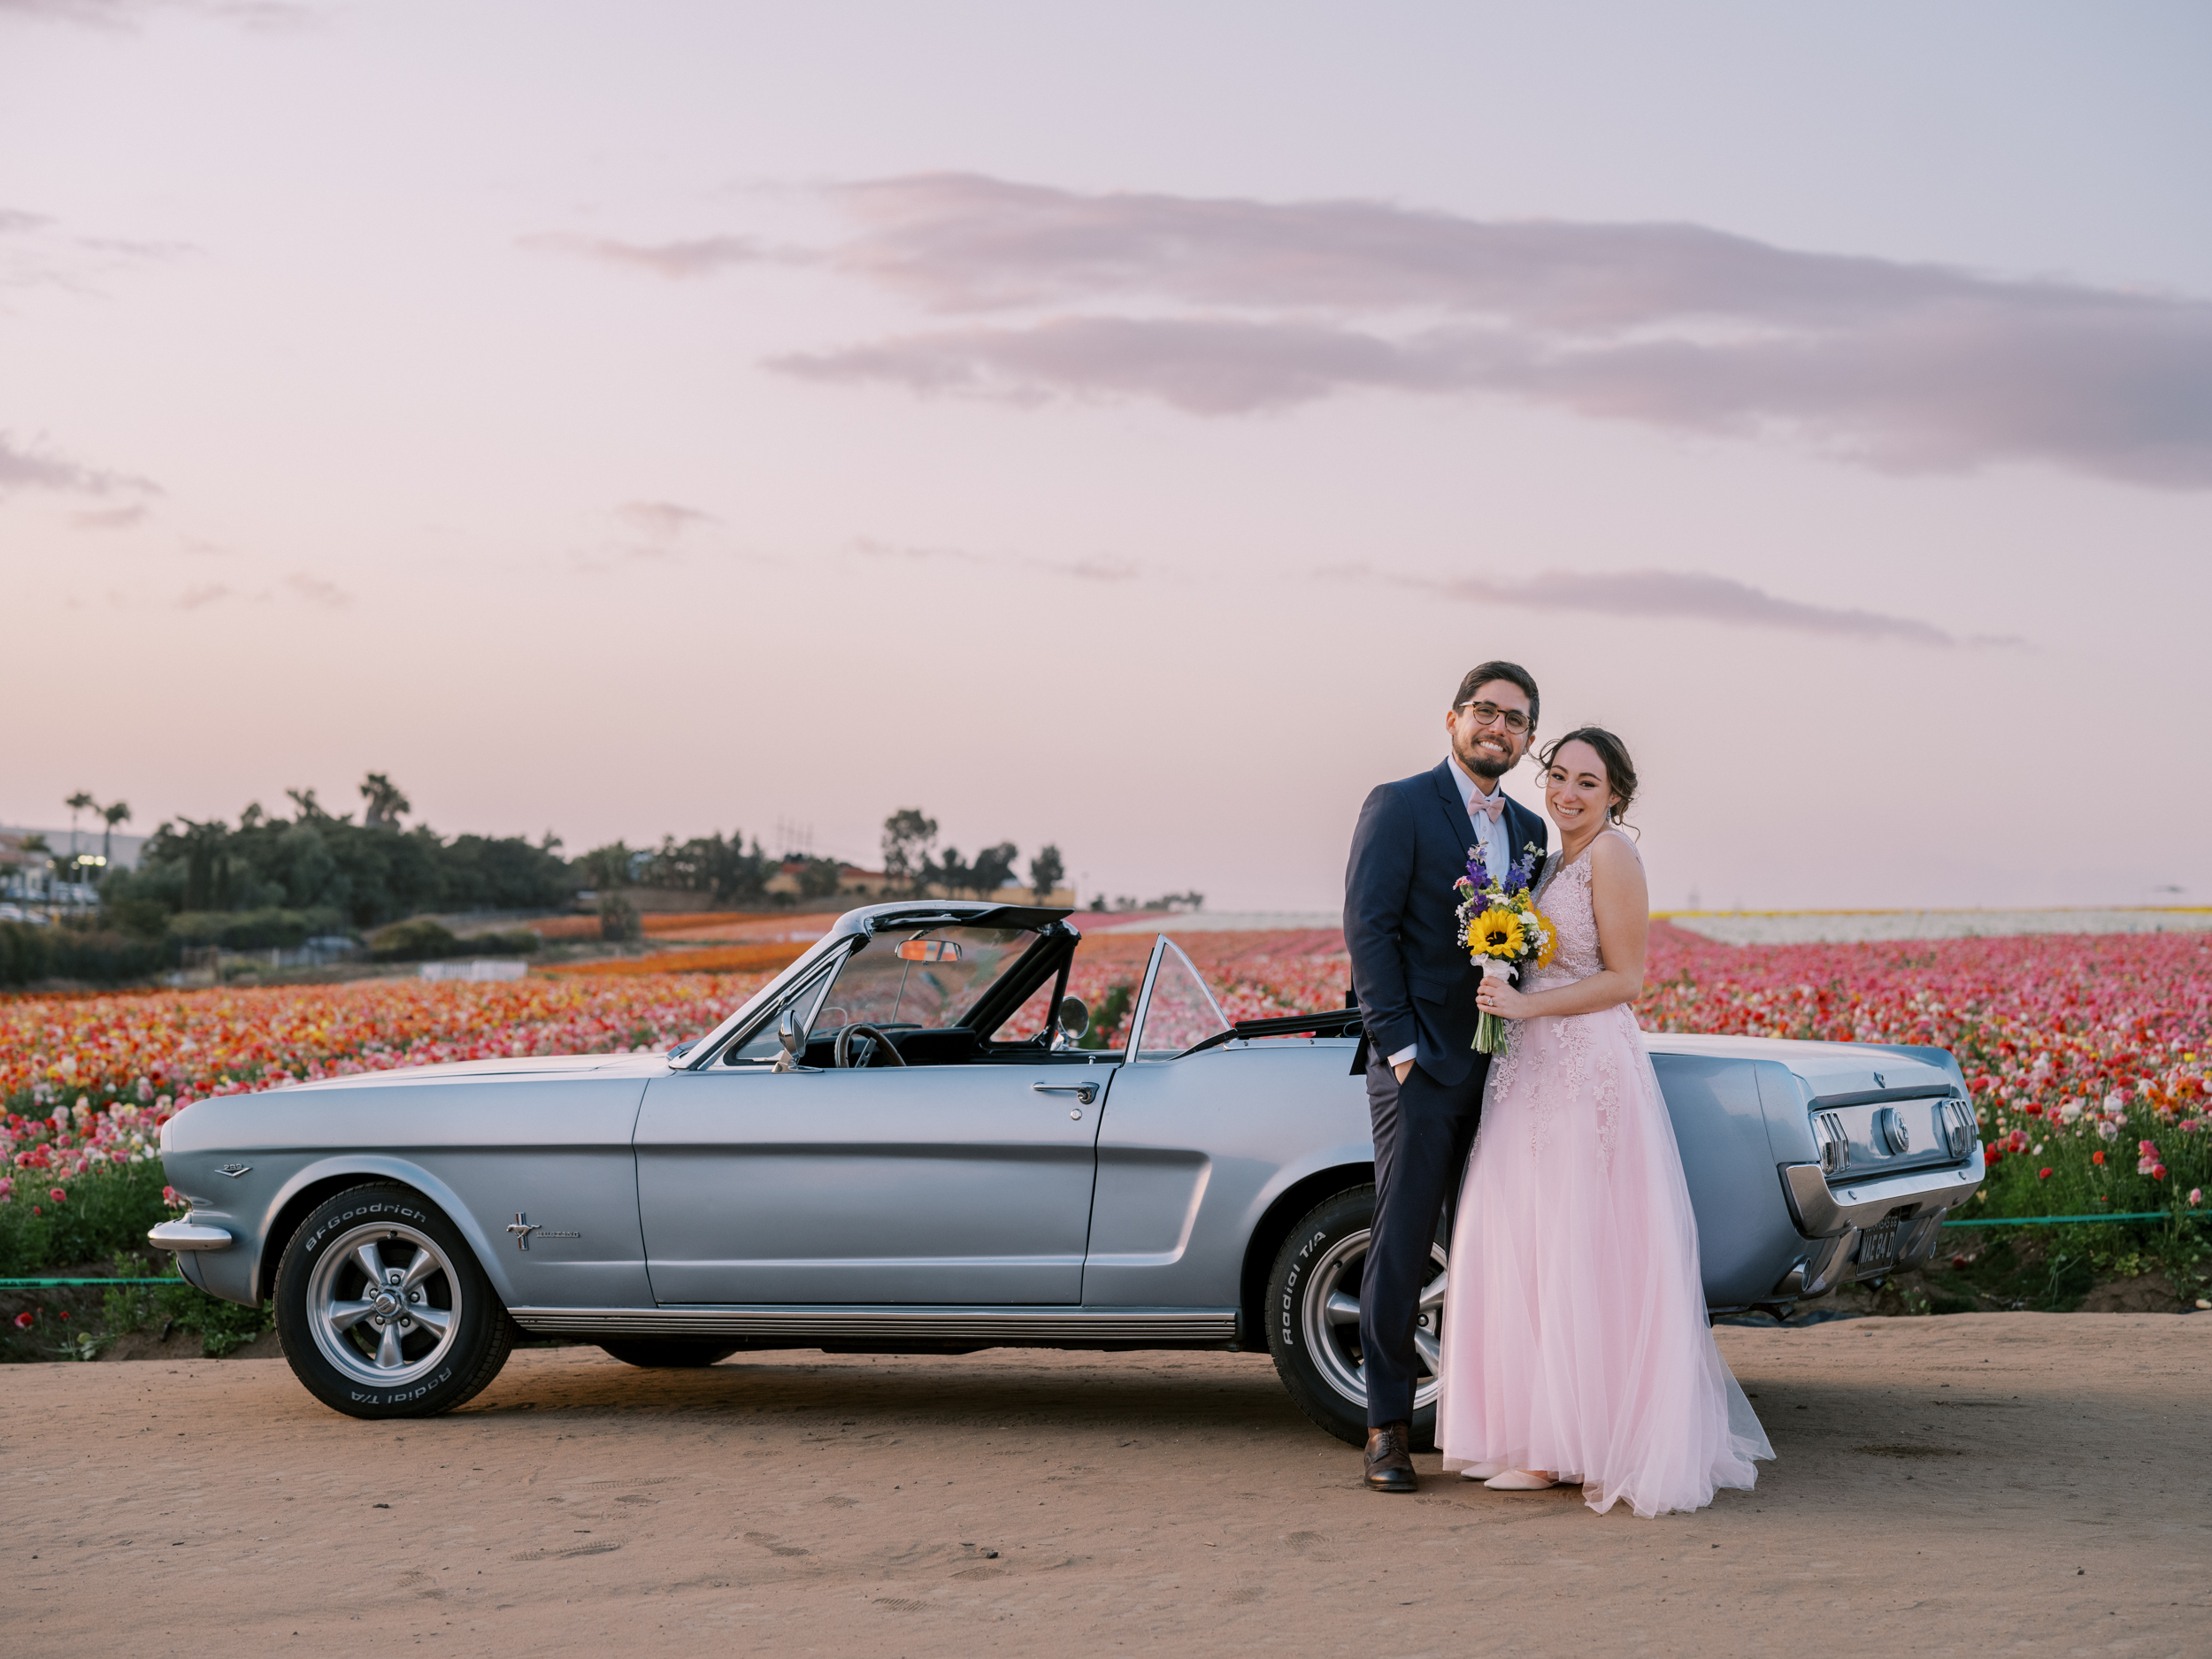 classic mustang getaway car with bride and groom carlsbad wedding